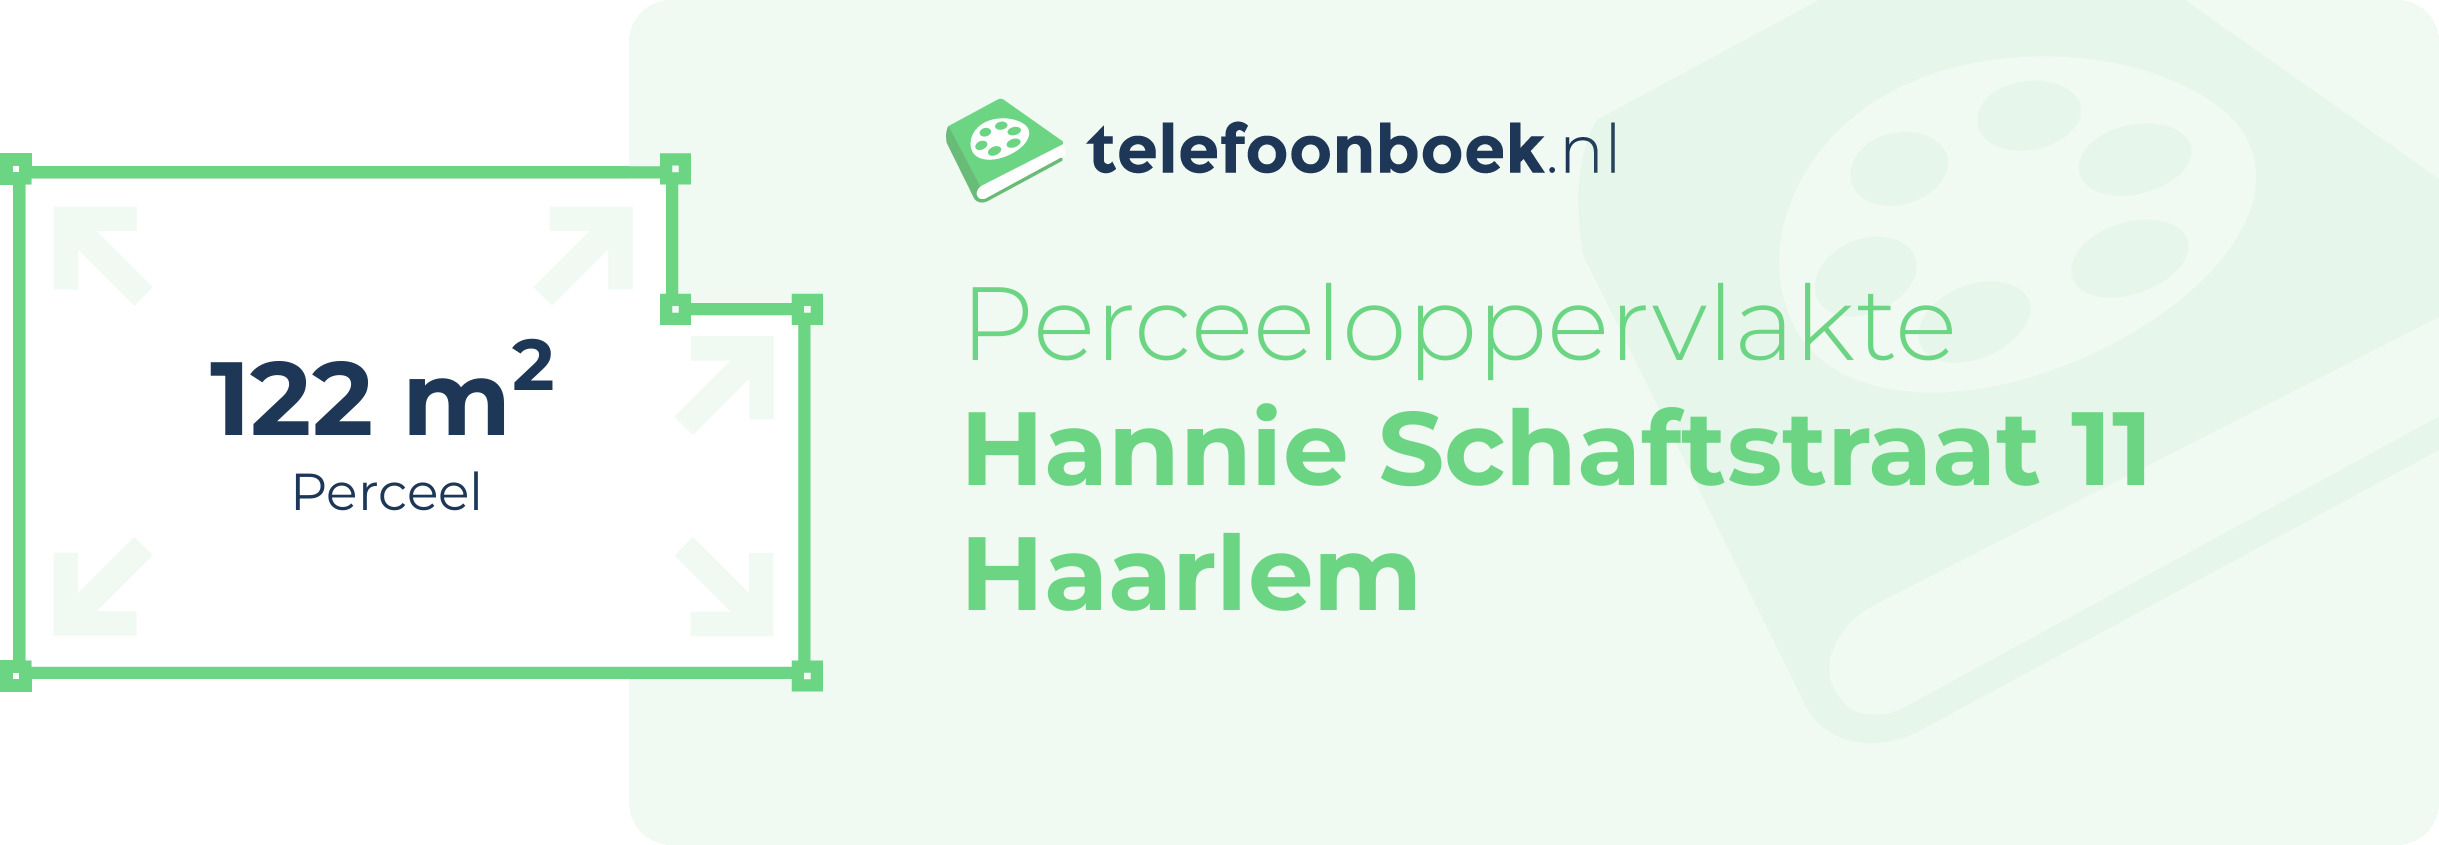 Perceeloppervlakte Hannie Schaftstraat 11 Haarlem